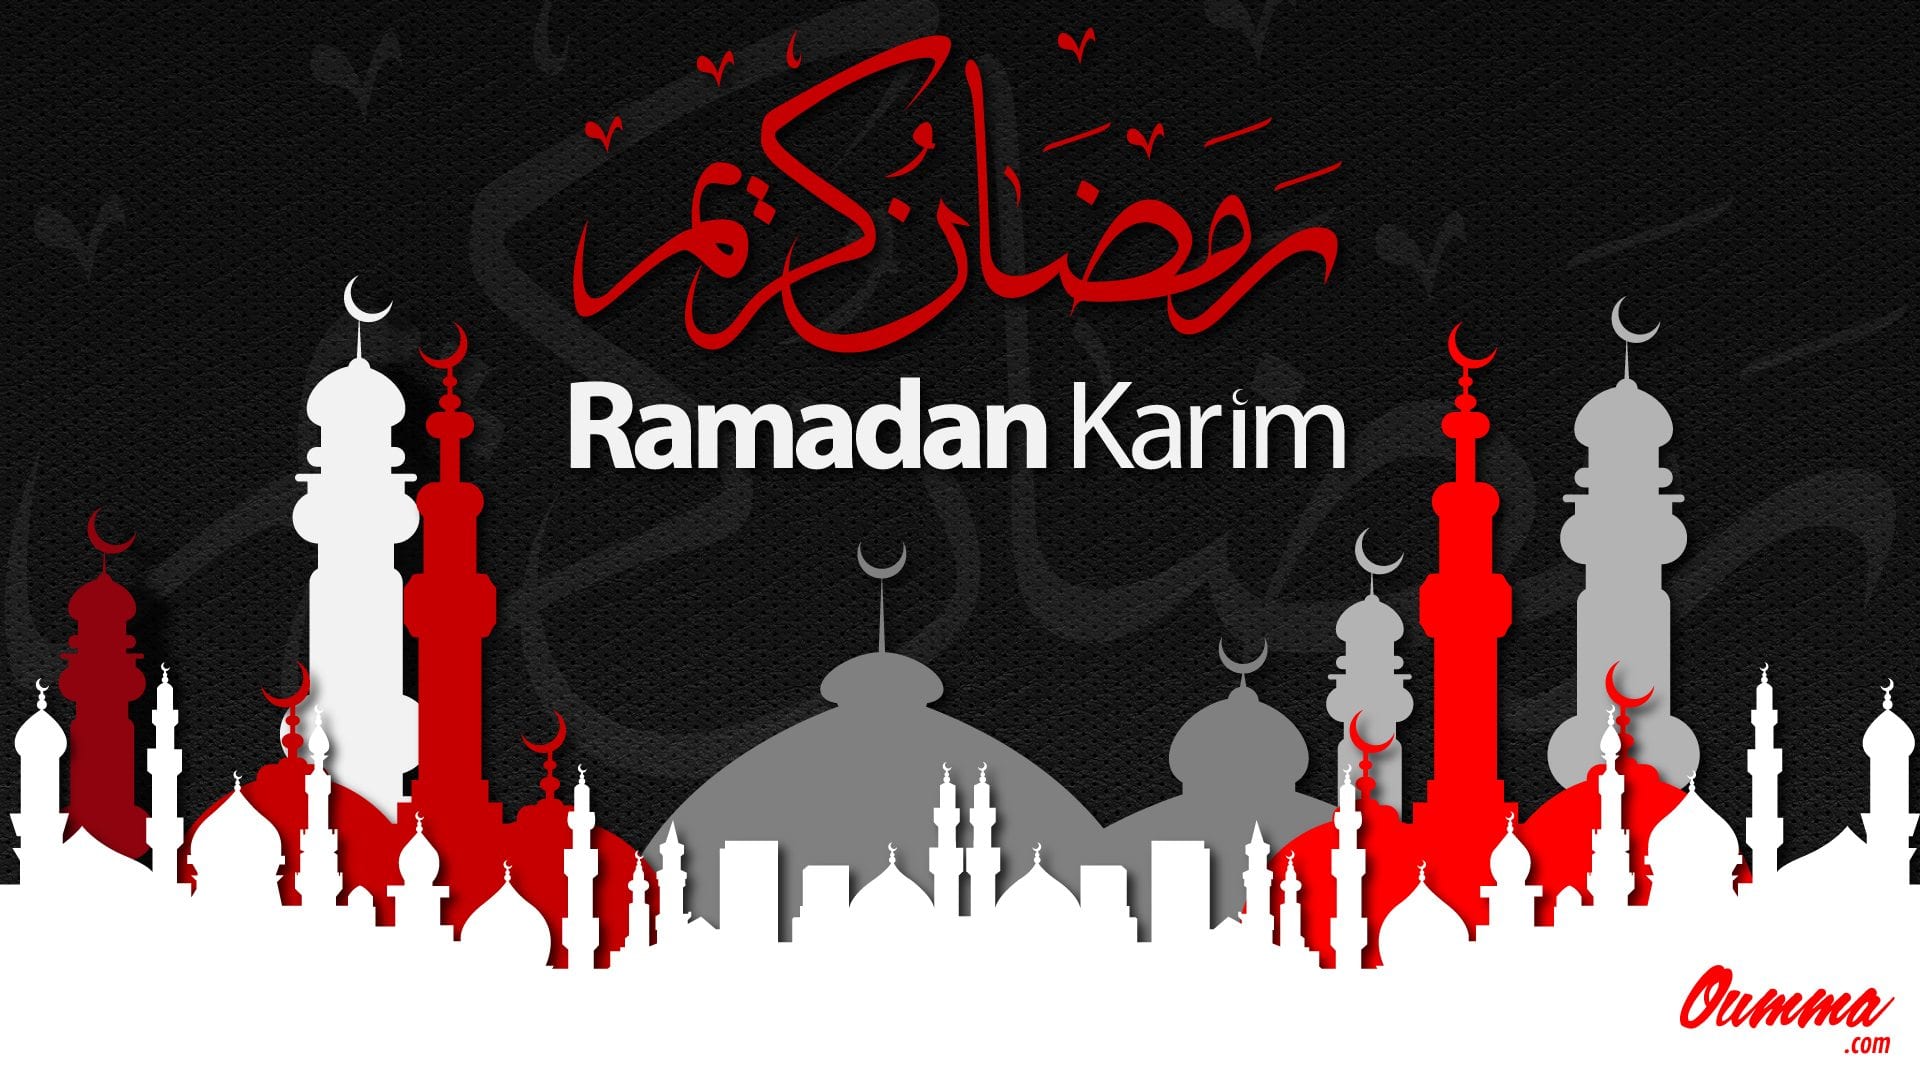 Прелюбодеяние в рамадан. Рамадан. Ramadan Kareem. В честь праздника Рамадан скидка.